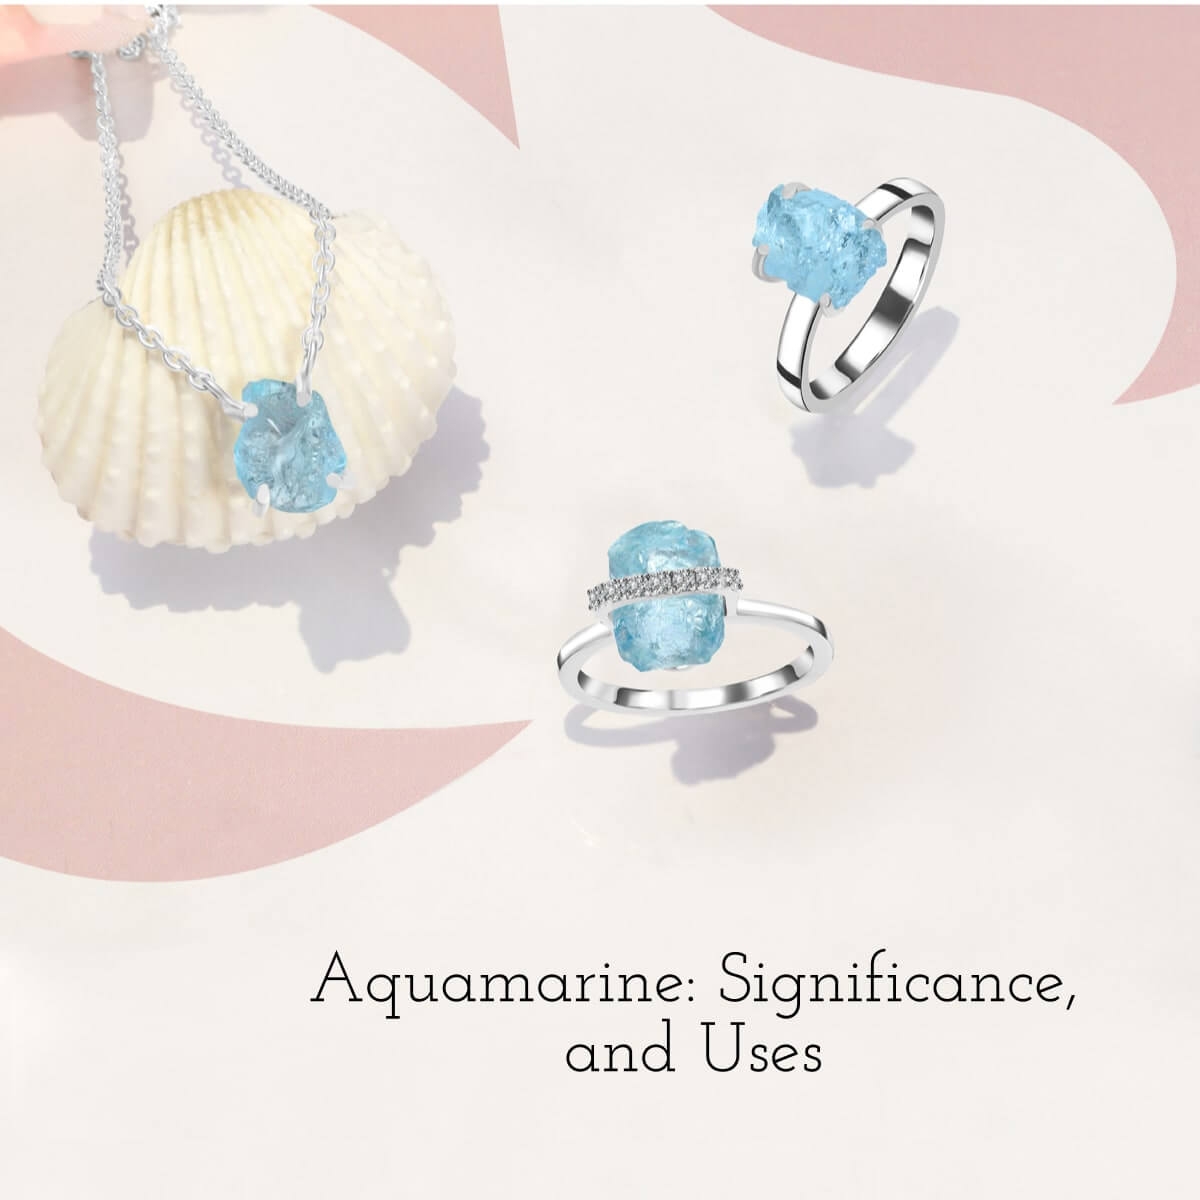 Aquamarine Uses and benefits